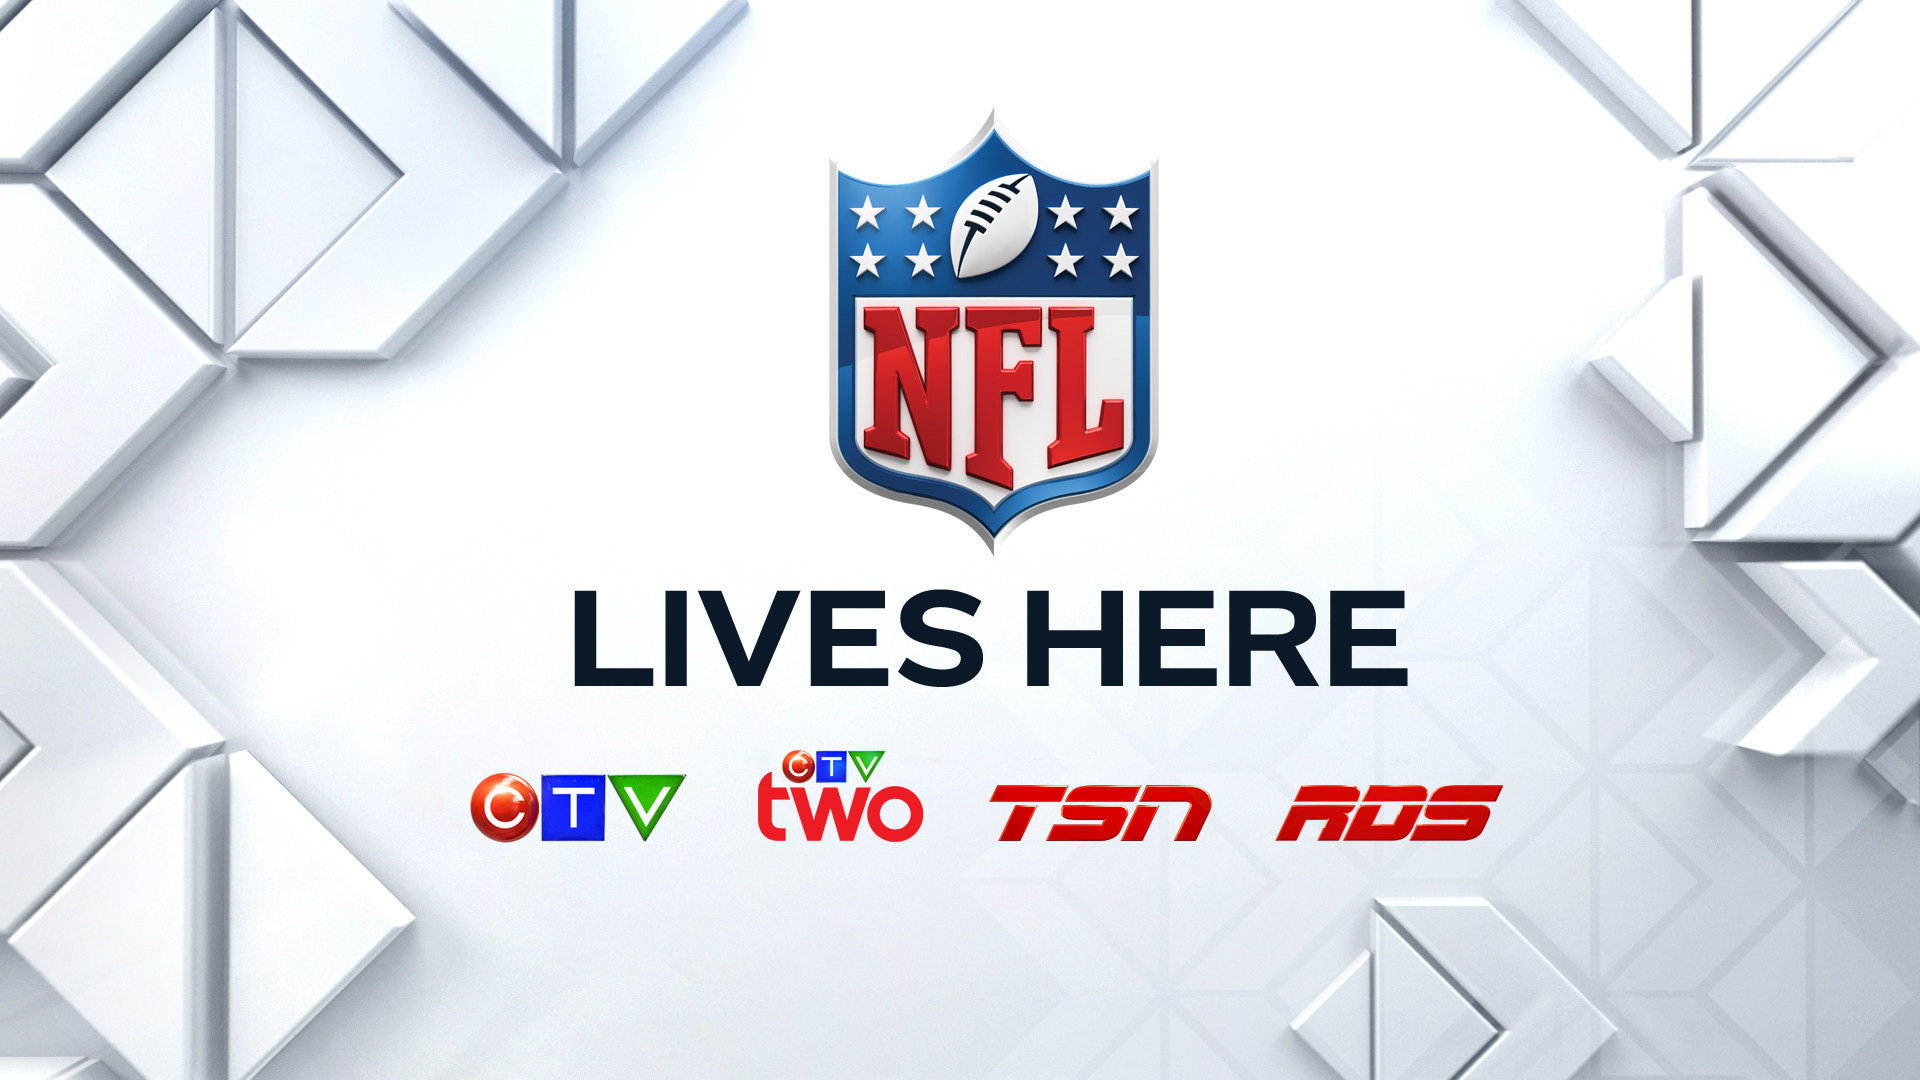 Bell Media-THURSDAY NIGHT FOOTBALL Comes to TSN- CTV- CTV Two- a